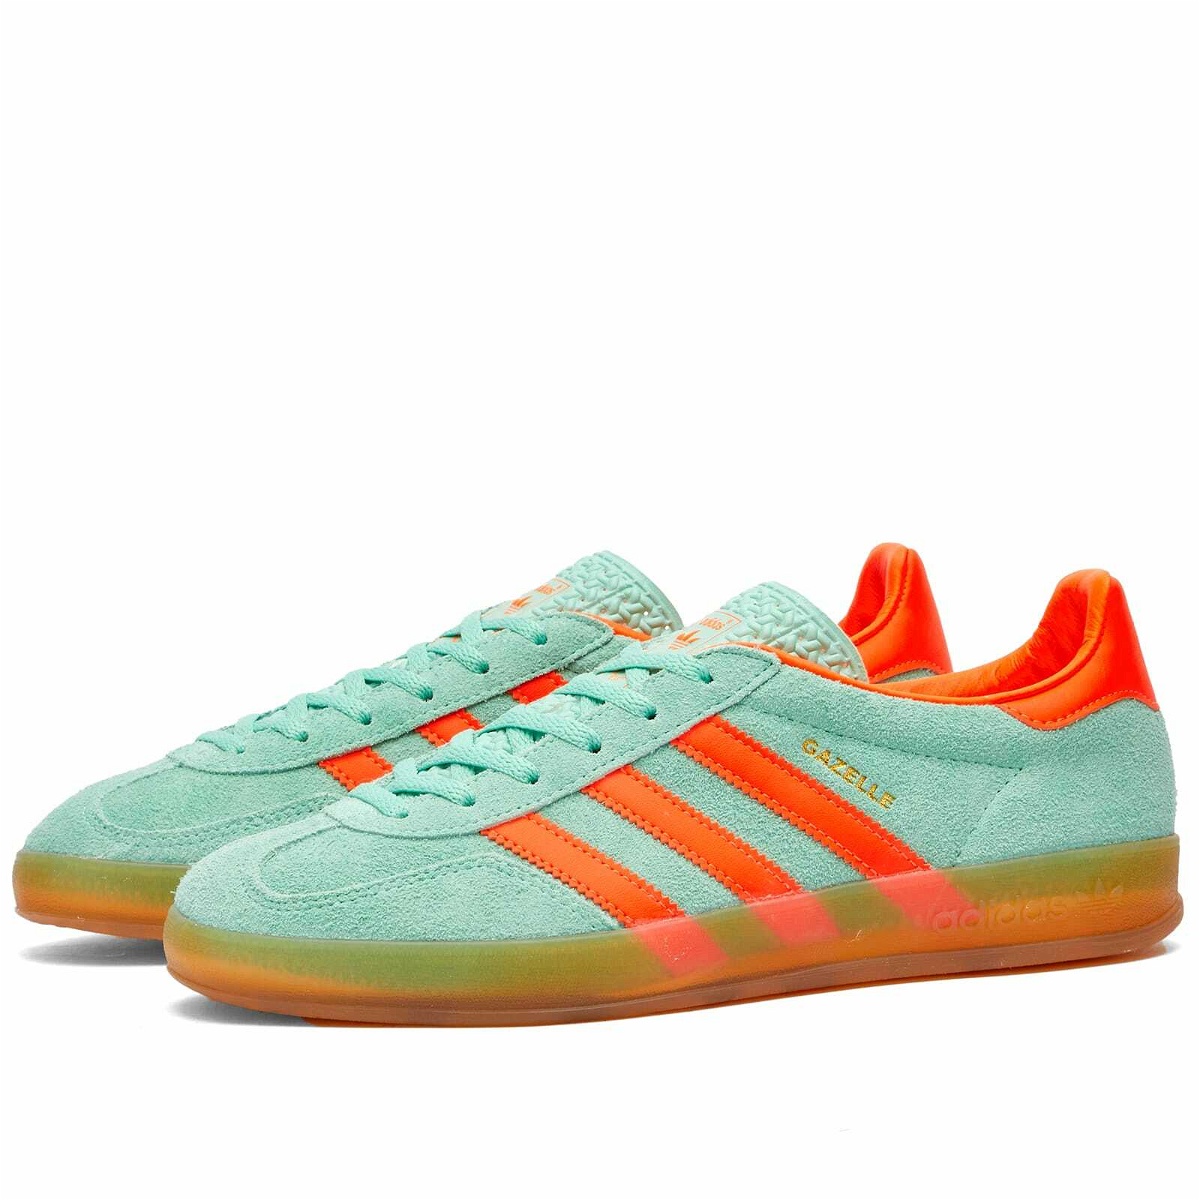 Adidas Gazelle Indoor W in Pulse Mint/Orange adidas Sneakers